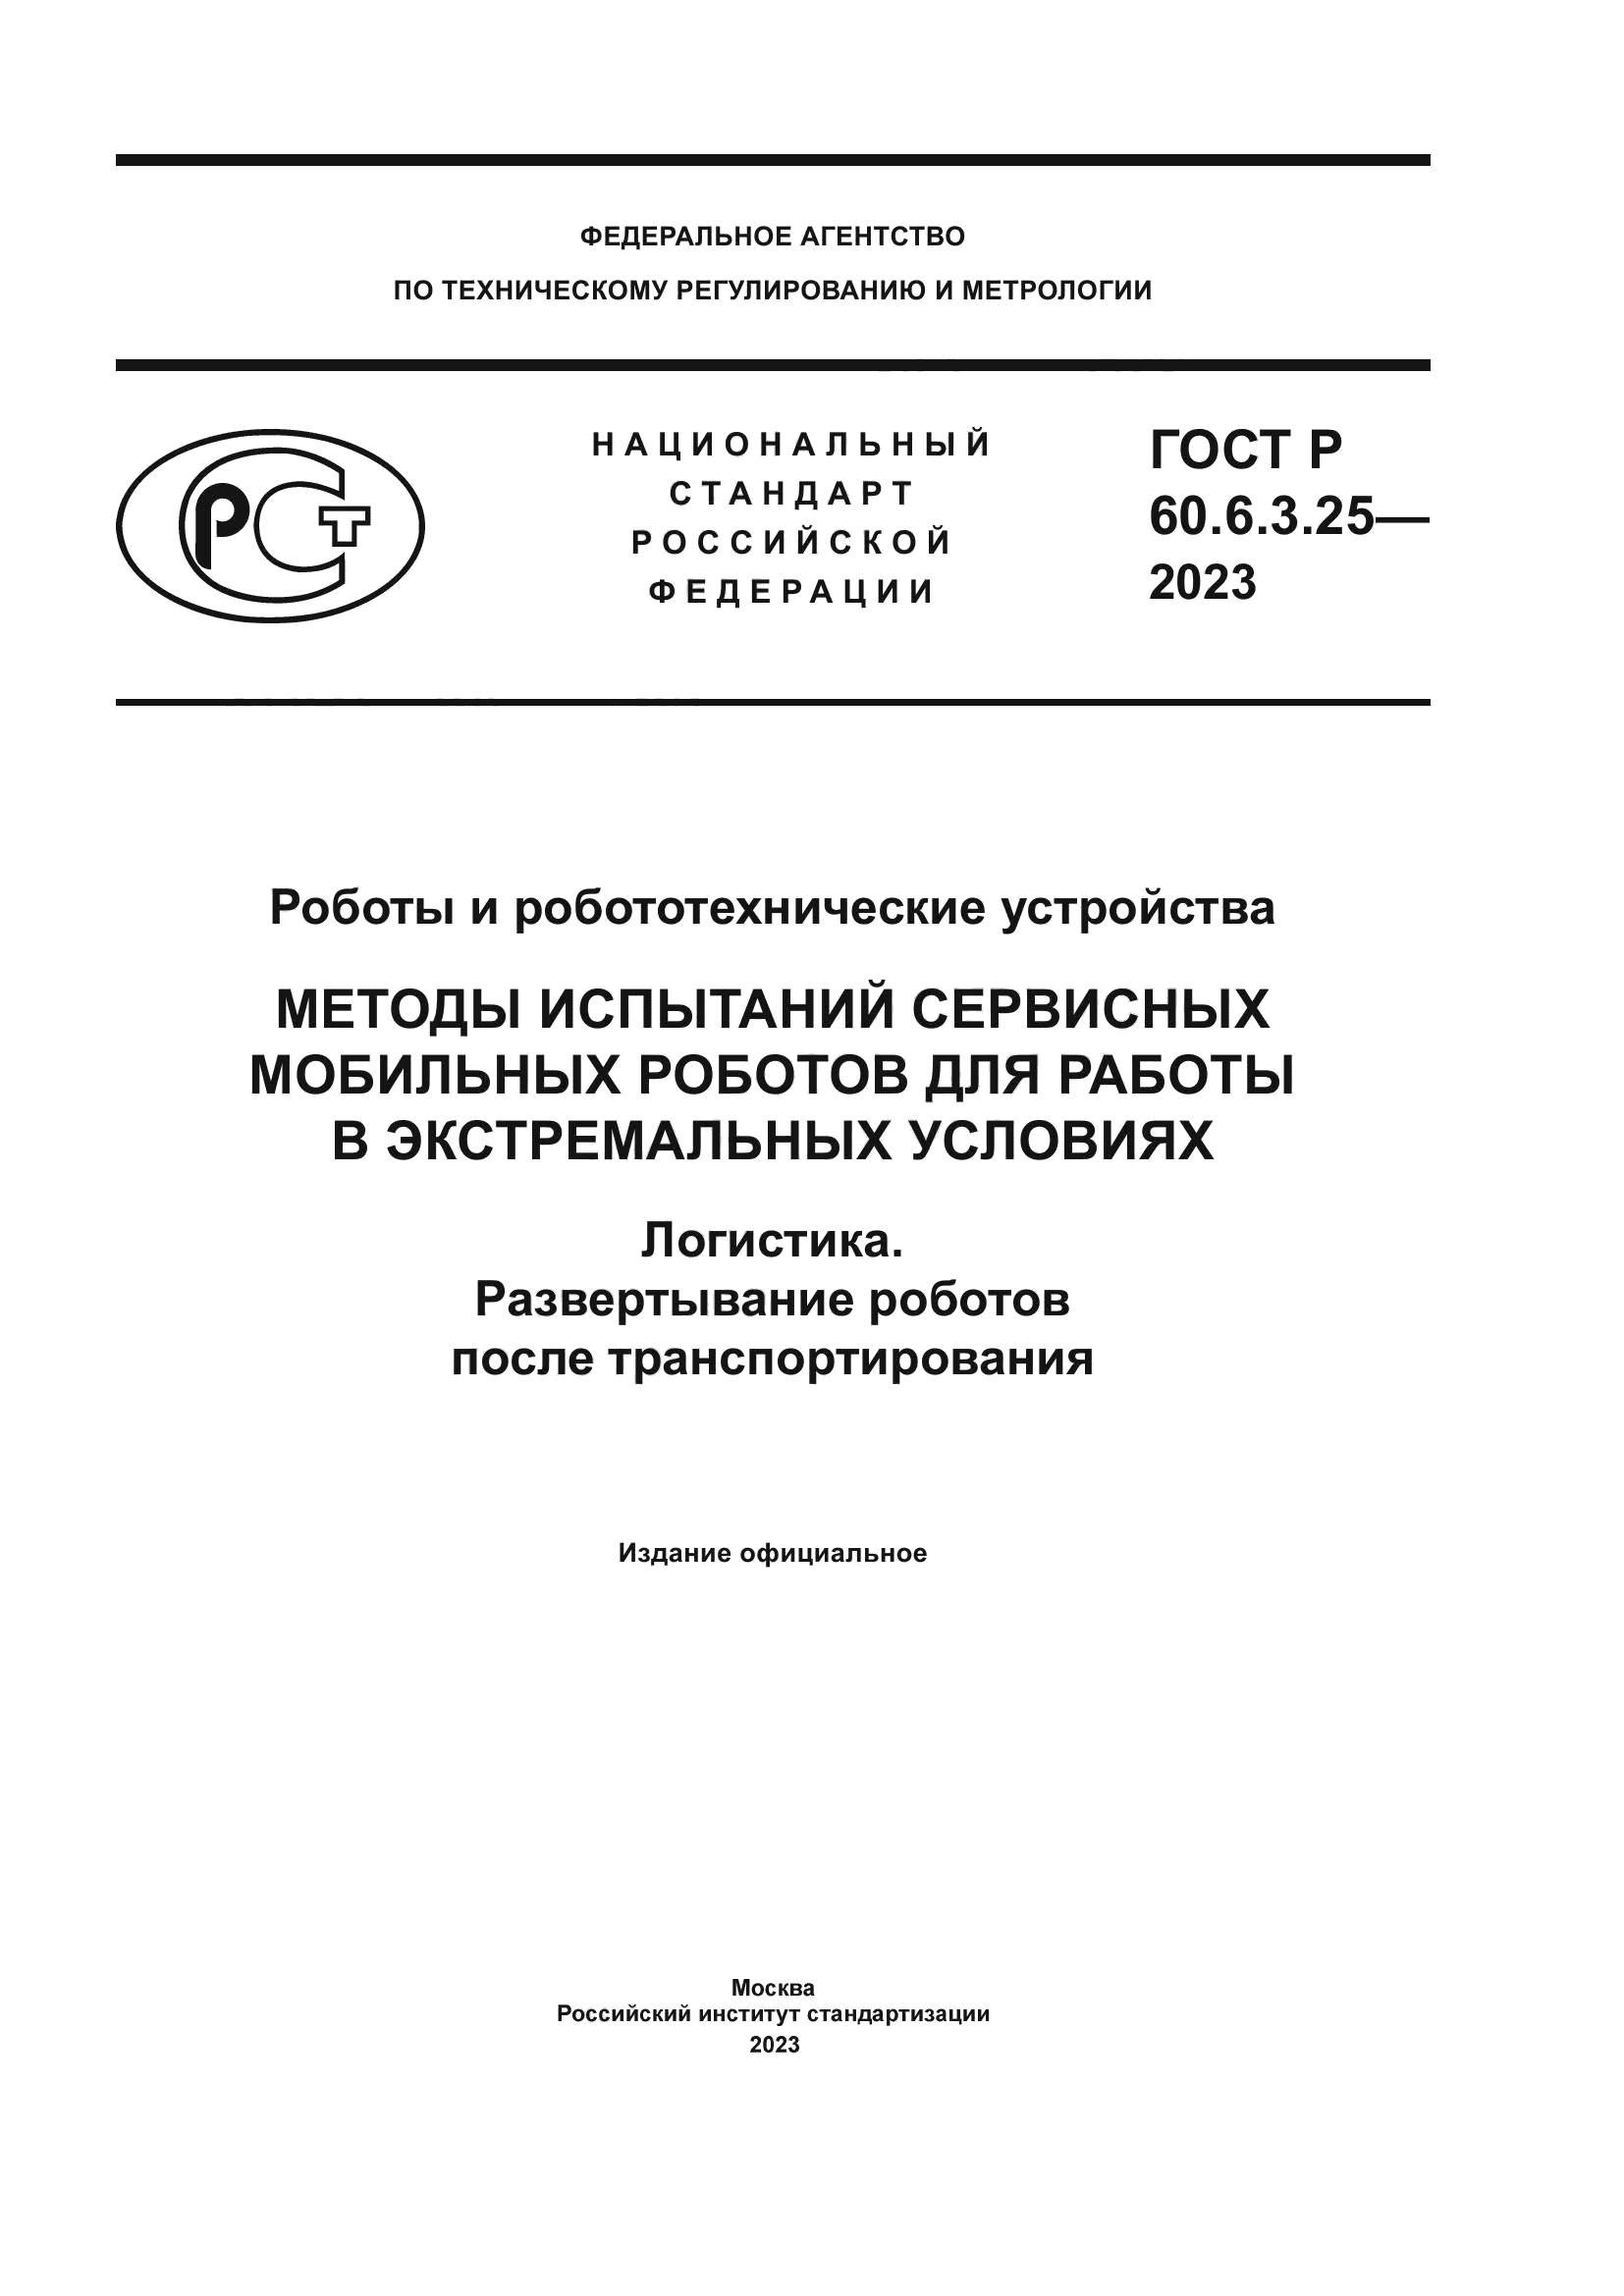 ГОСТ Р 60.6.3.25-2023